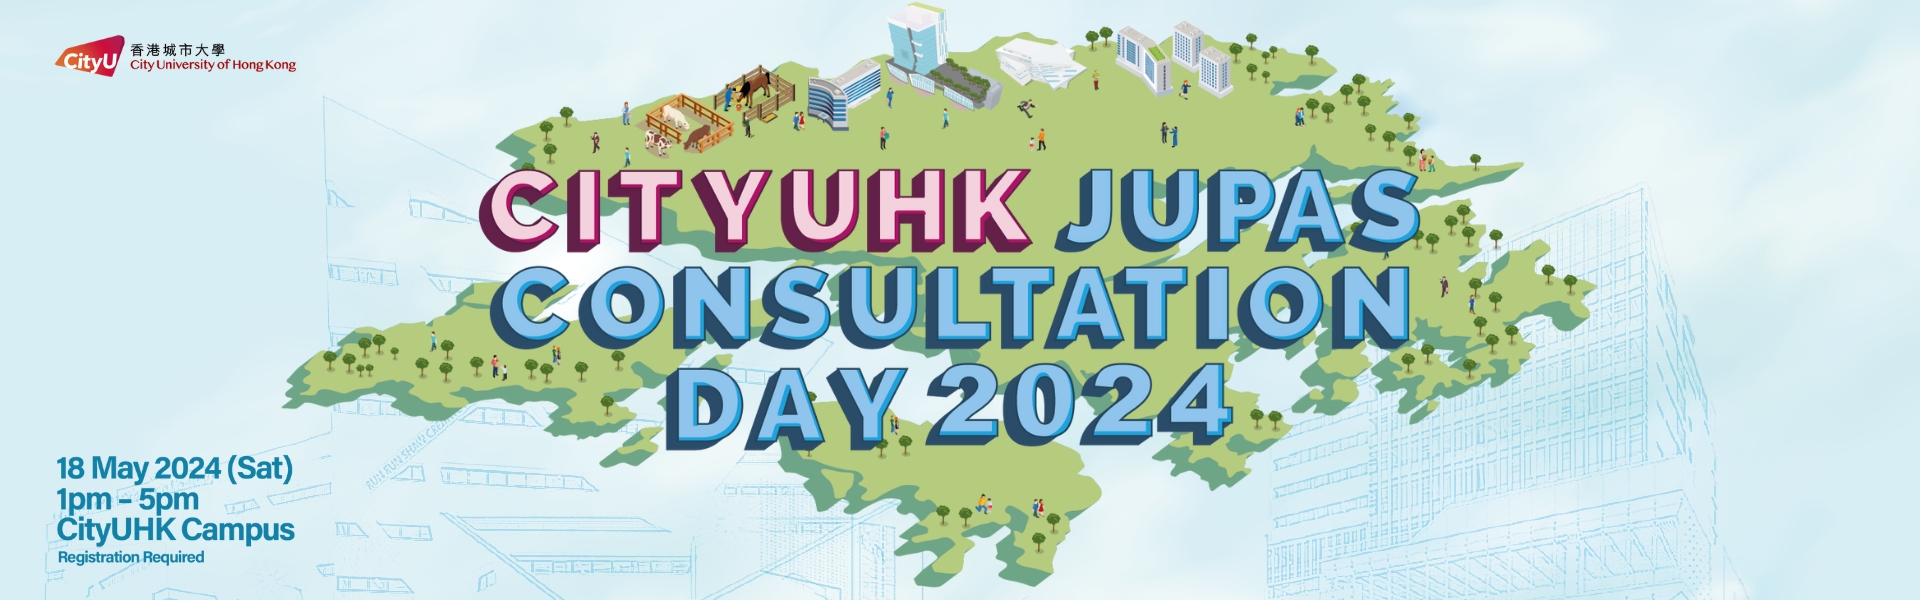 CityuUHK JUPAS Consultation Day 2024